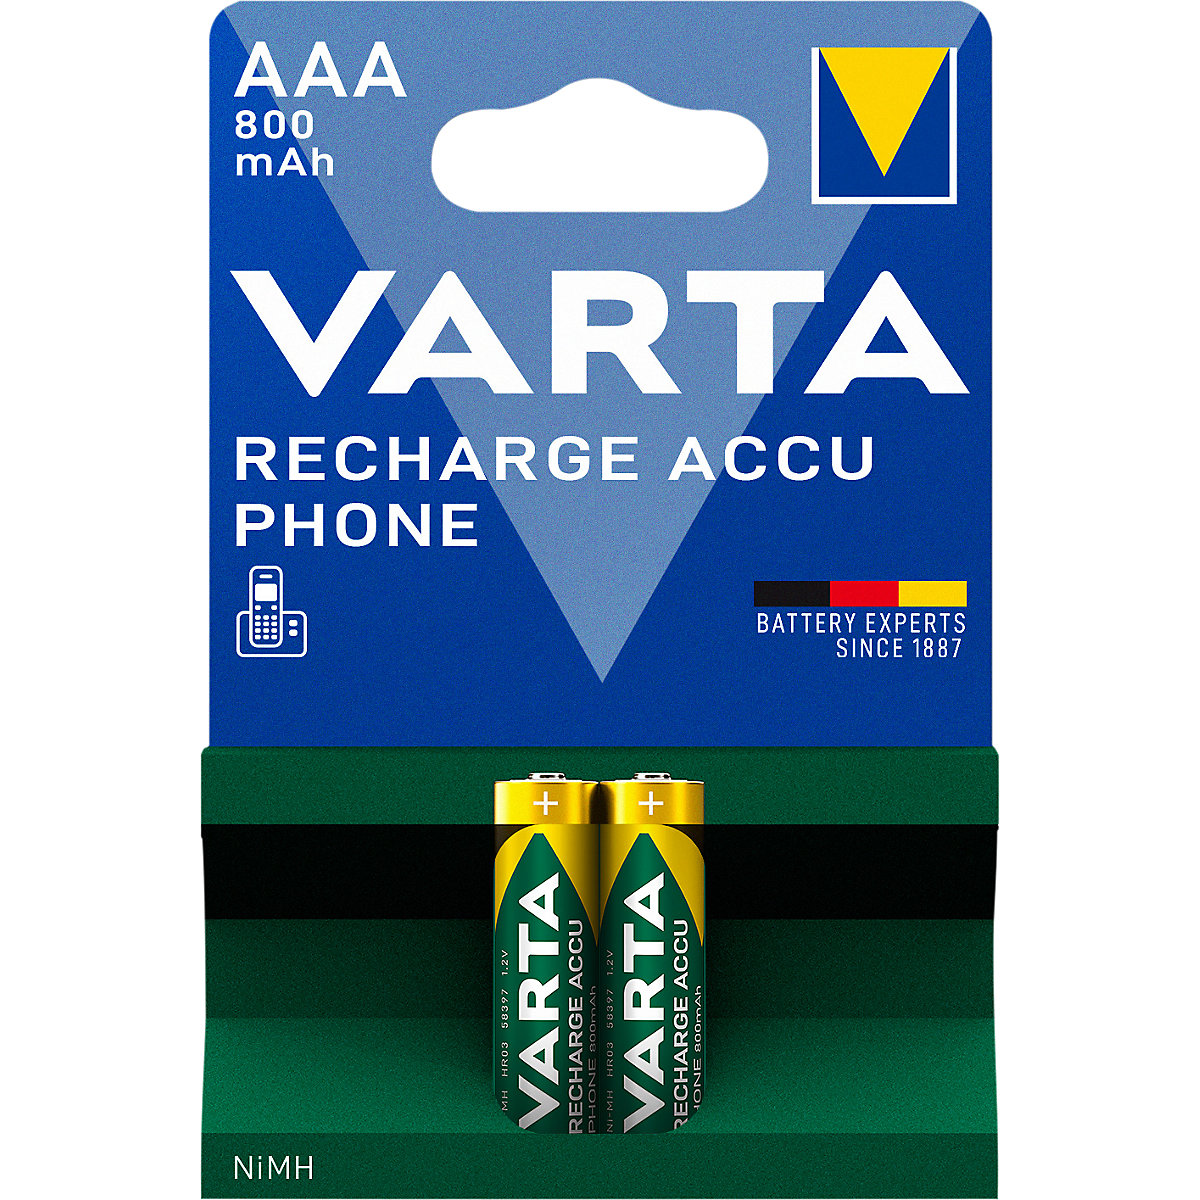 Batteria per telefoni cordless, ricaricabile – VARTA